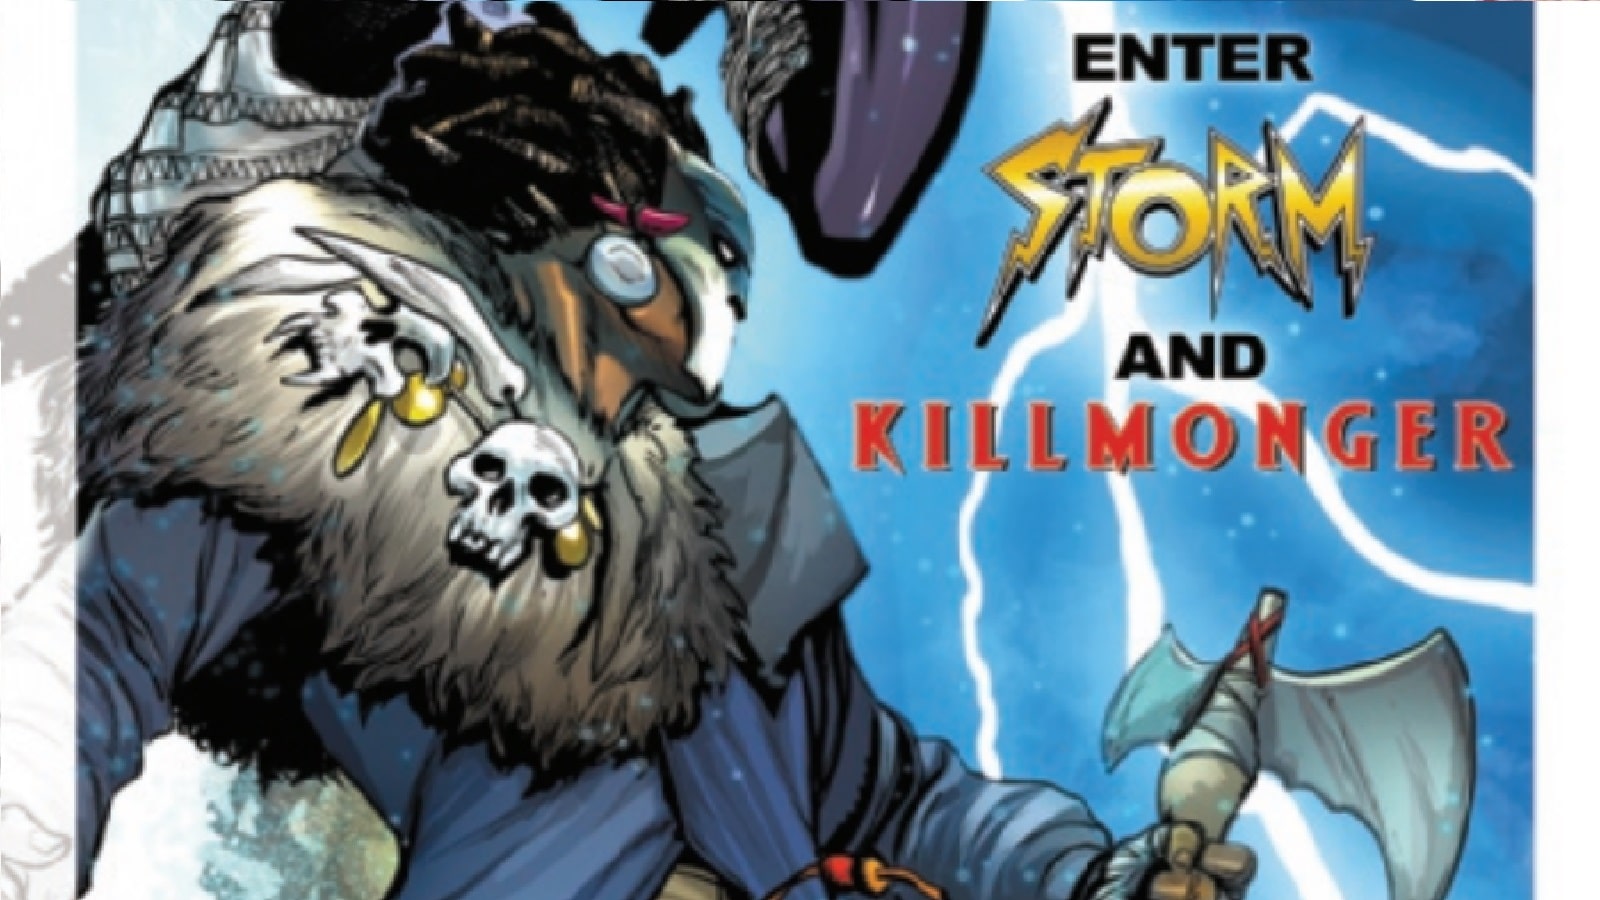 An image of Killmonger, and the words "Enter STORM and KILLMONGER"